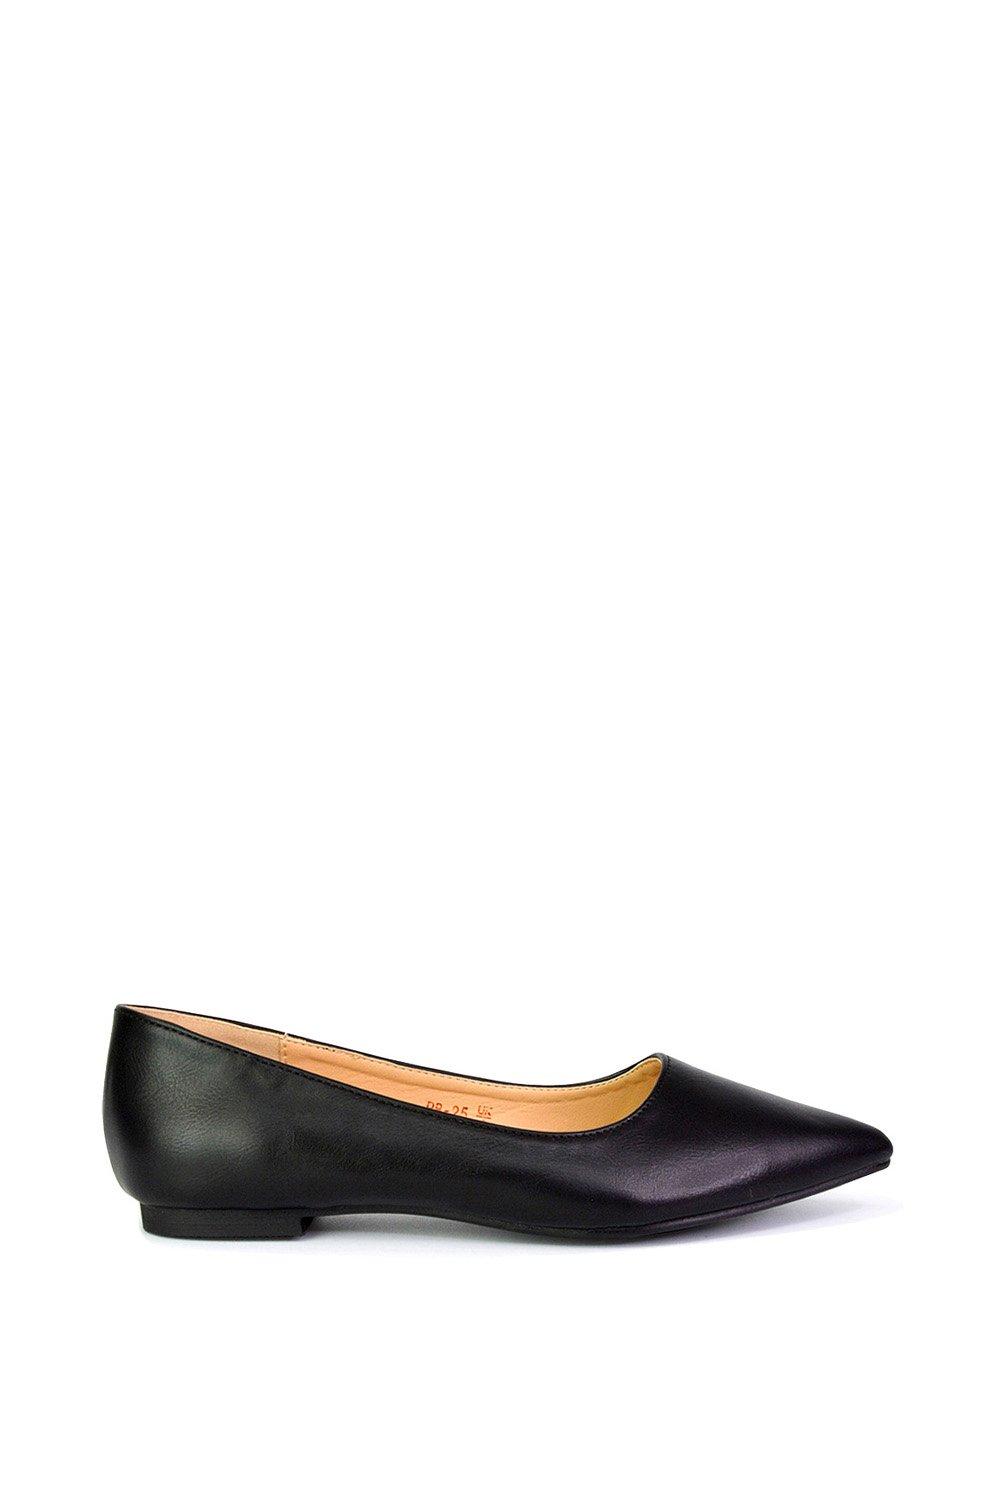 XY London Women's 'Bubbles' Pointed Toe Slip on Flat Ballerina Pump Shoes|Size: 6|black